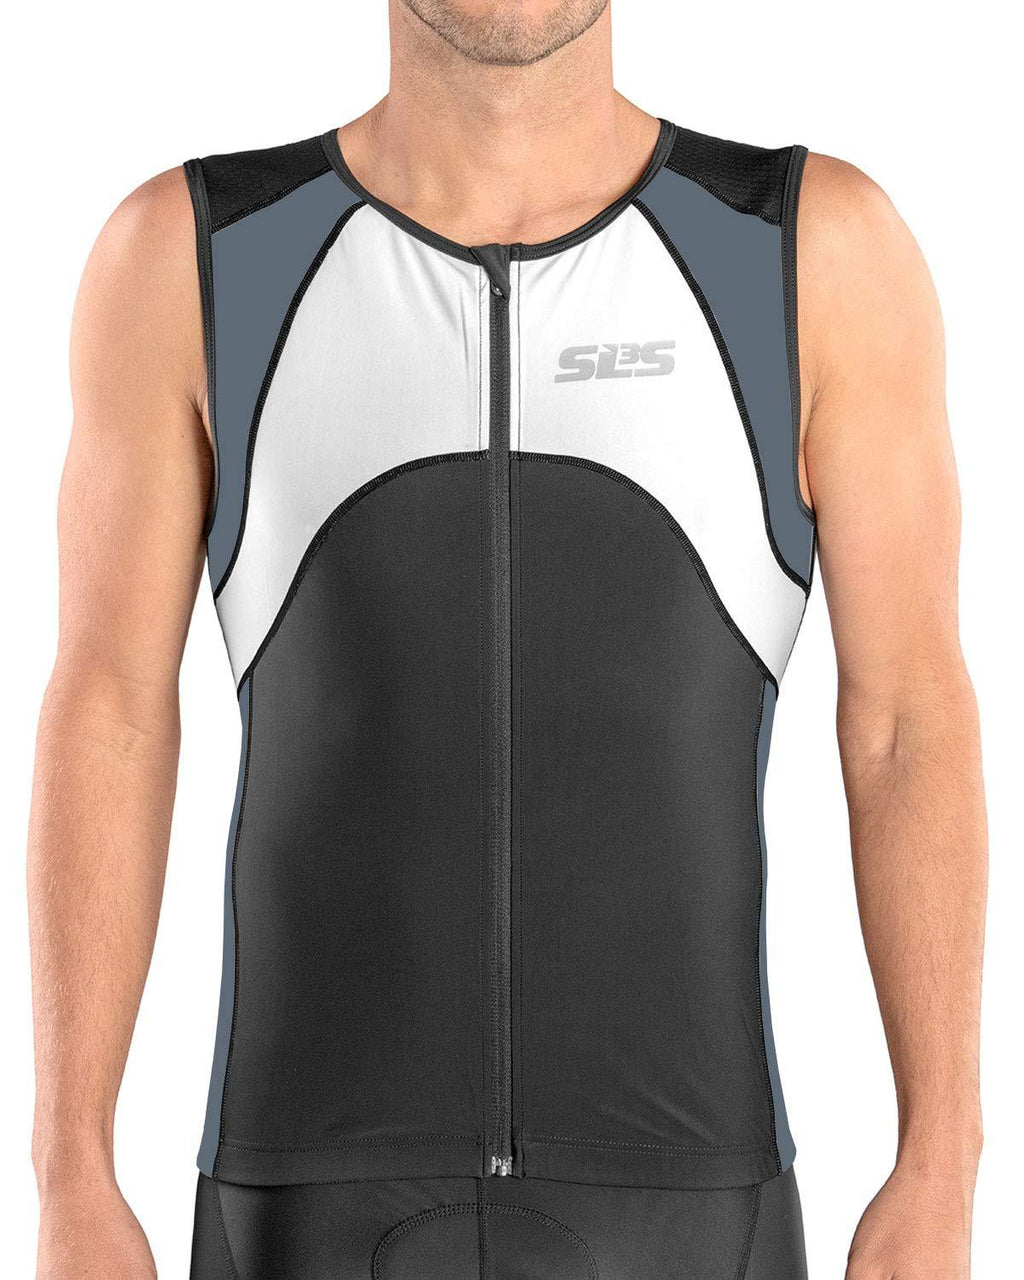 [AUSTRALIA] - SLS3 Mens Triathlon Top - Triathlon Shirt Mens - Tri Jerseys - Tri Top Men - Men's Tri Top - Sleeveless Bike Jersey Black/Thunder Gray Large 